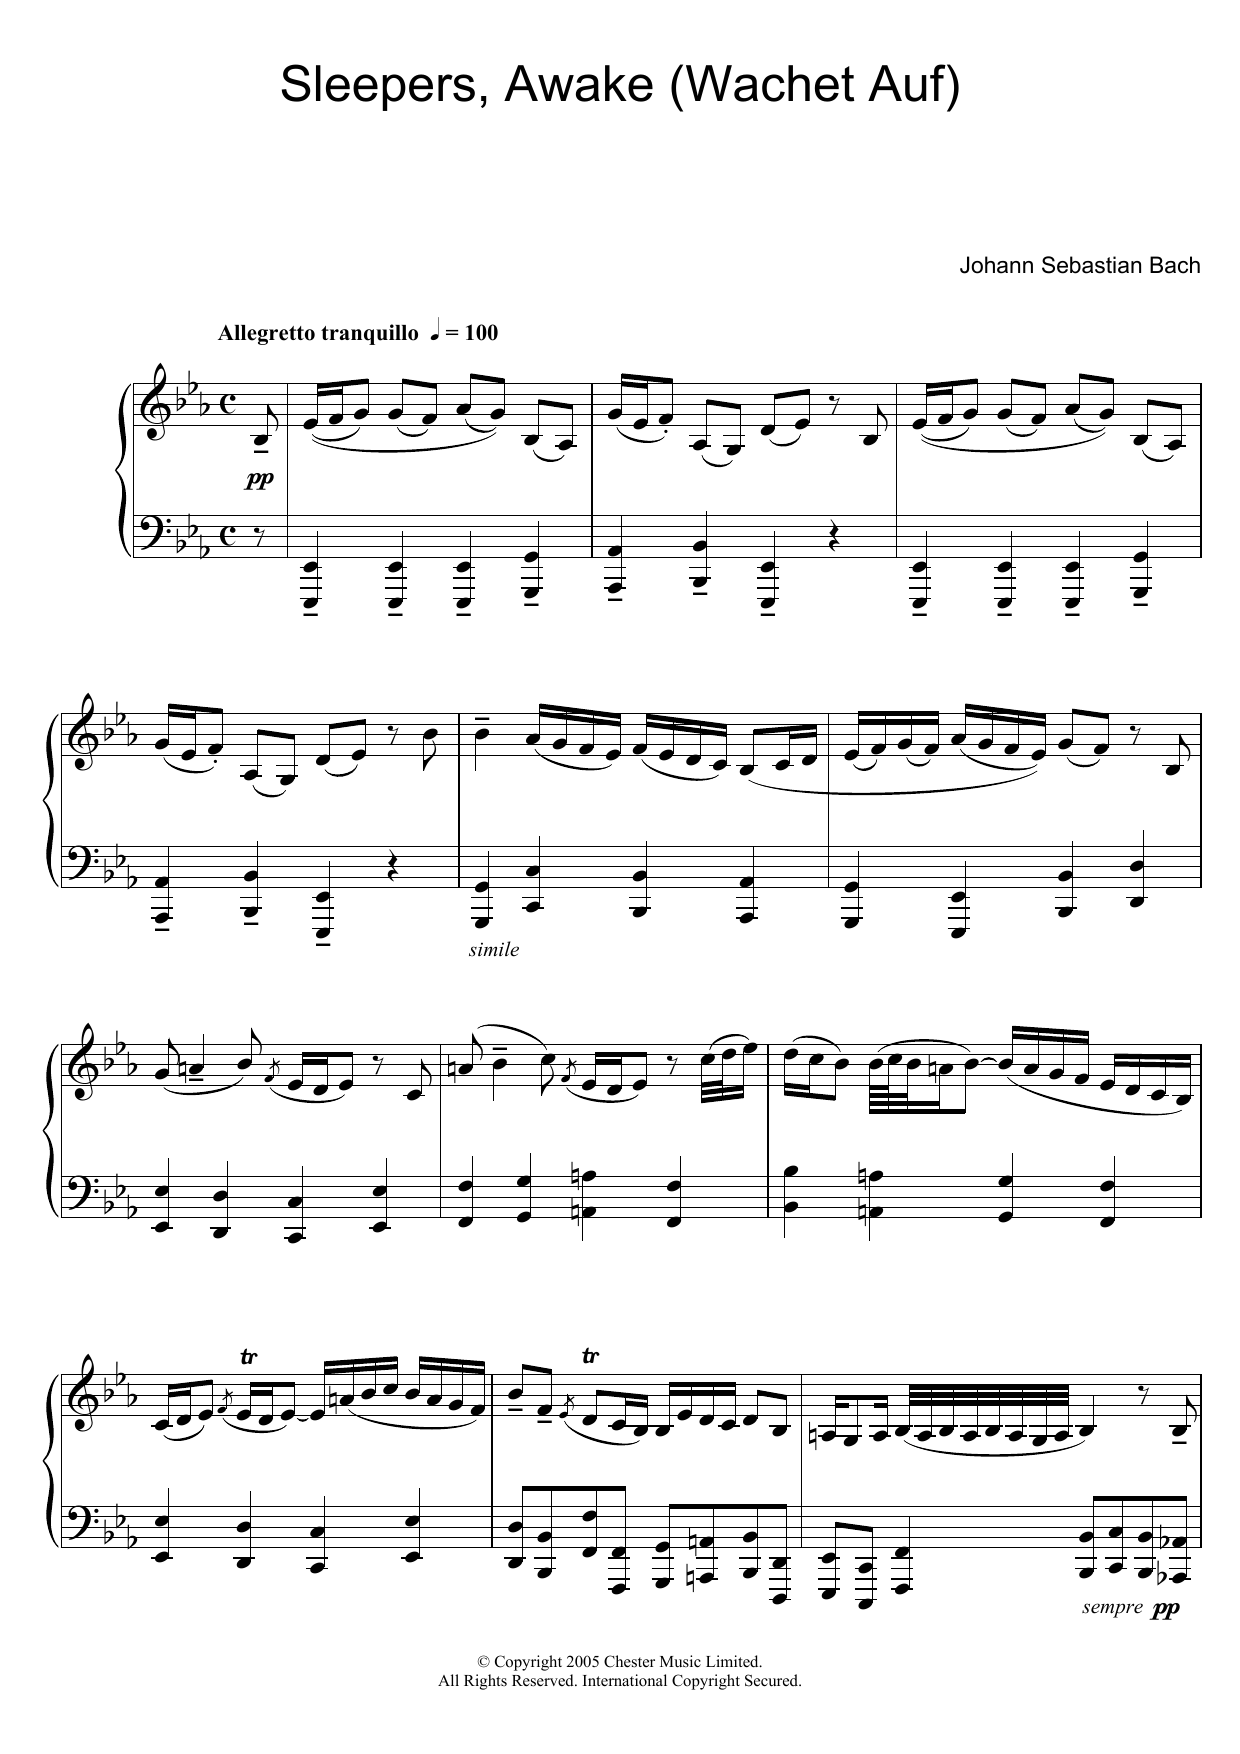 Johann Sebastian Bach Sleepers, Awake (Wachet Auf) Sheet Music Notes & Chords for Guitar Tab - Download or Print PDF